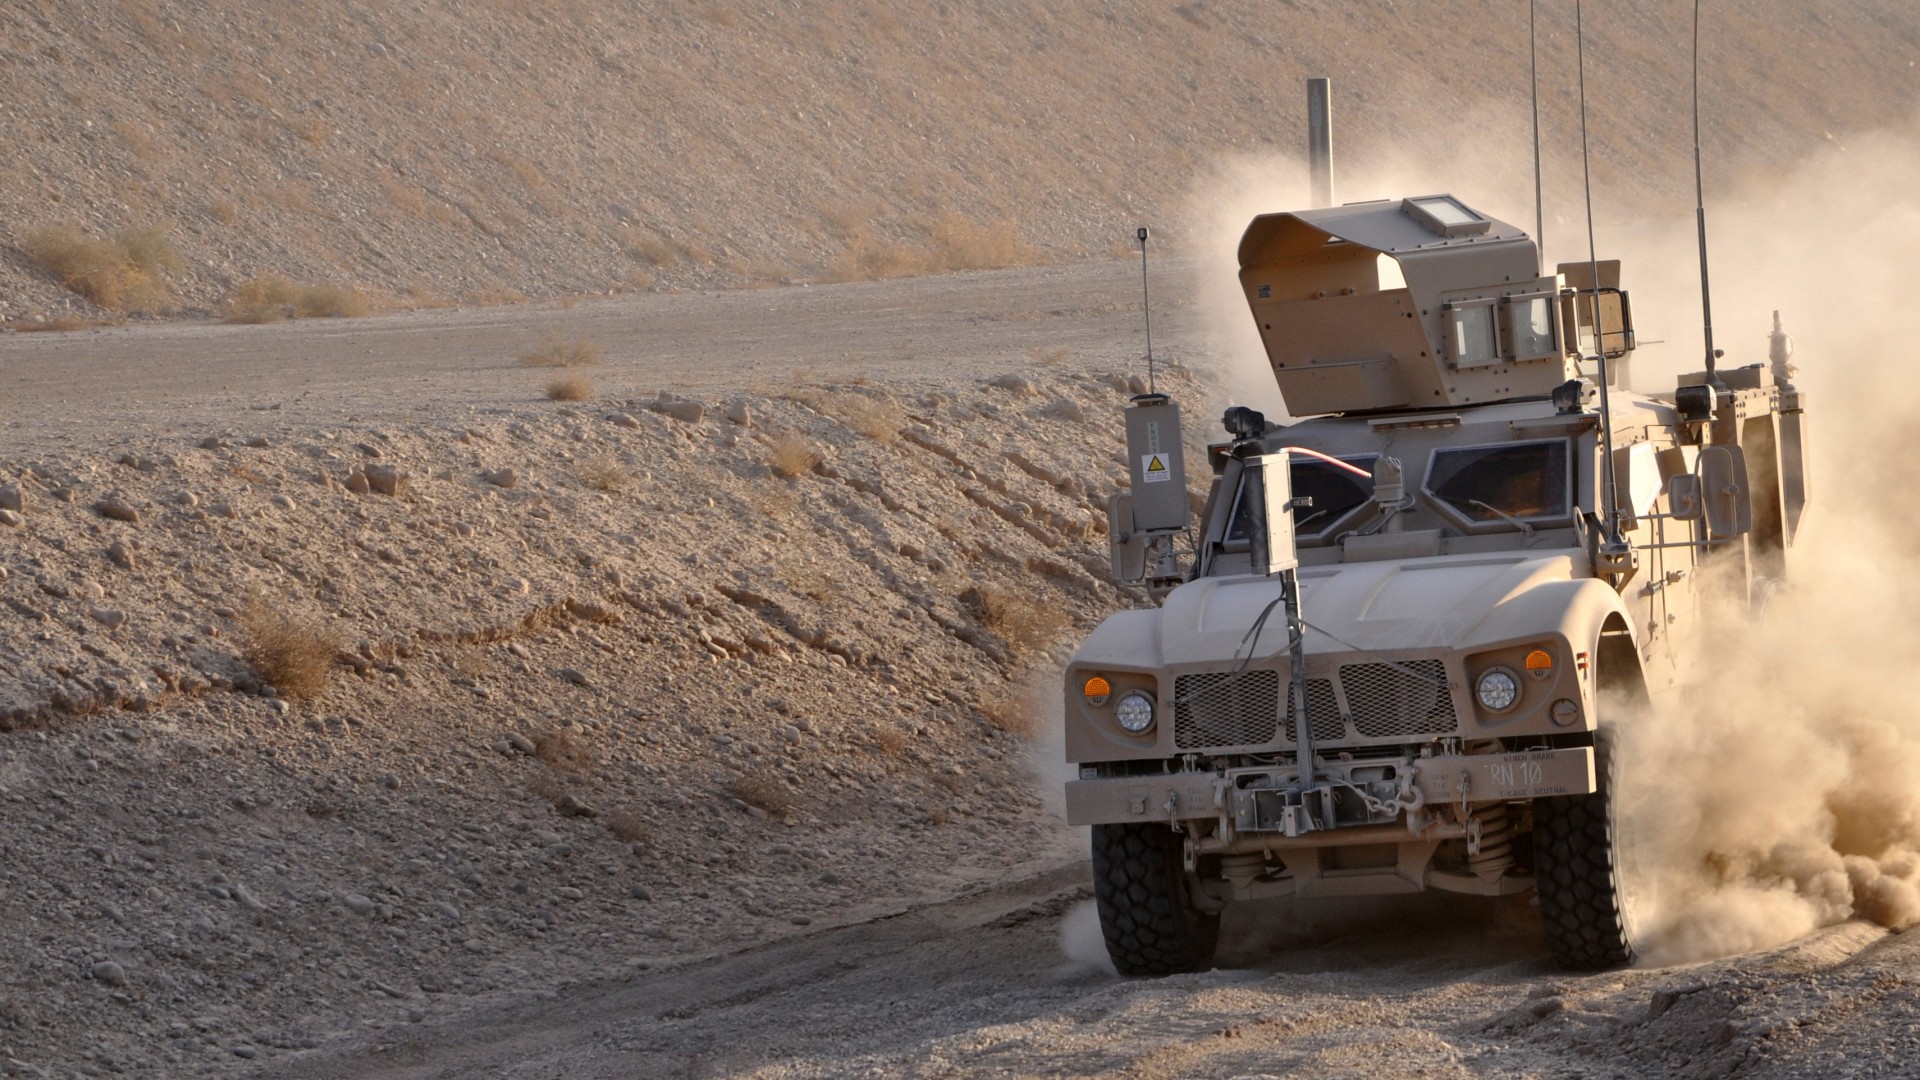 бронеавтомобиль, БРДМ, США, M-ATV, Oshkosh, MRAP, TerraMax, infantry mobility vehicle, field, desert, dust (horizontal)